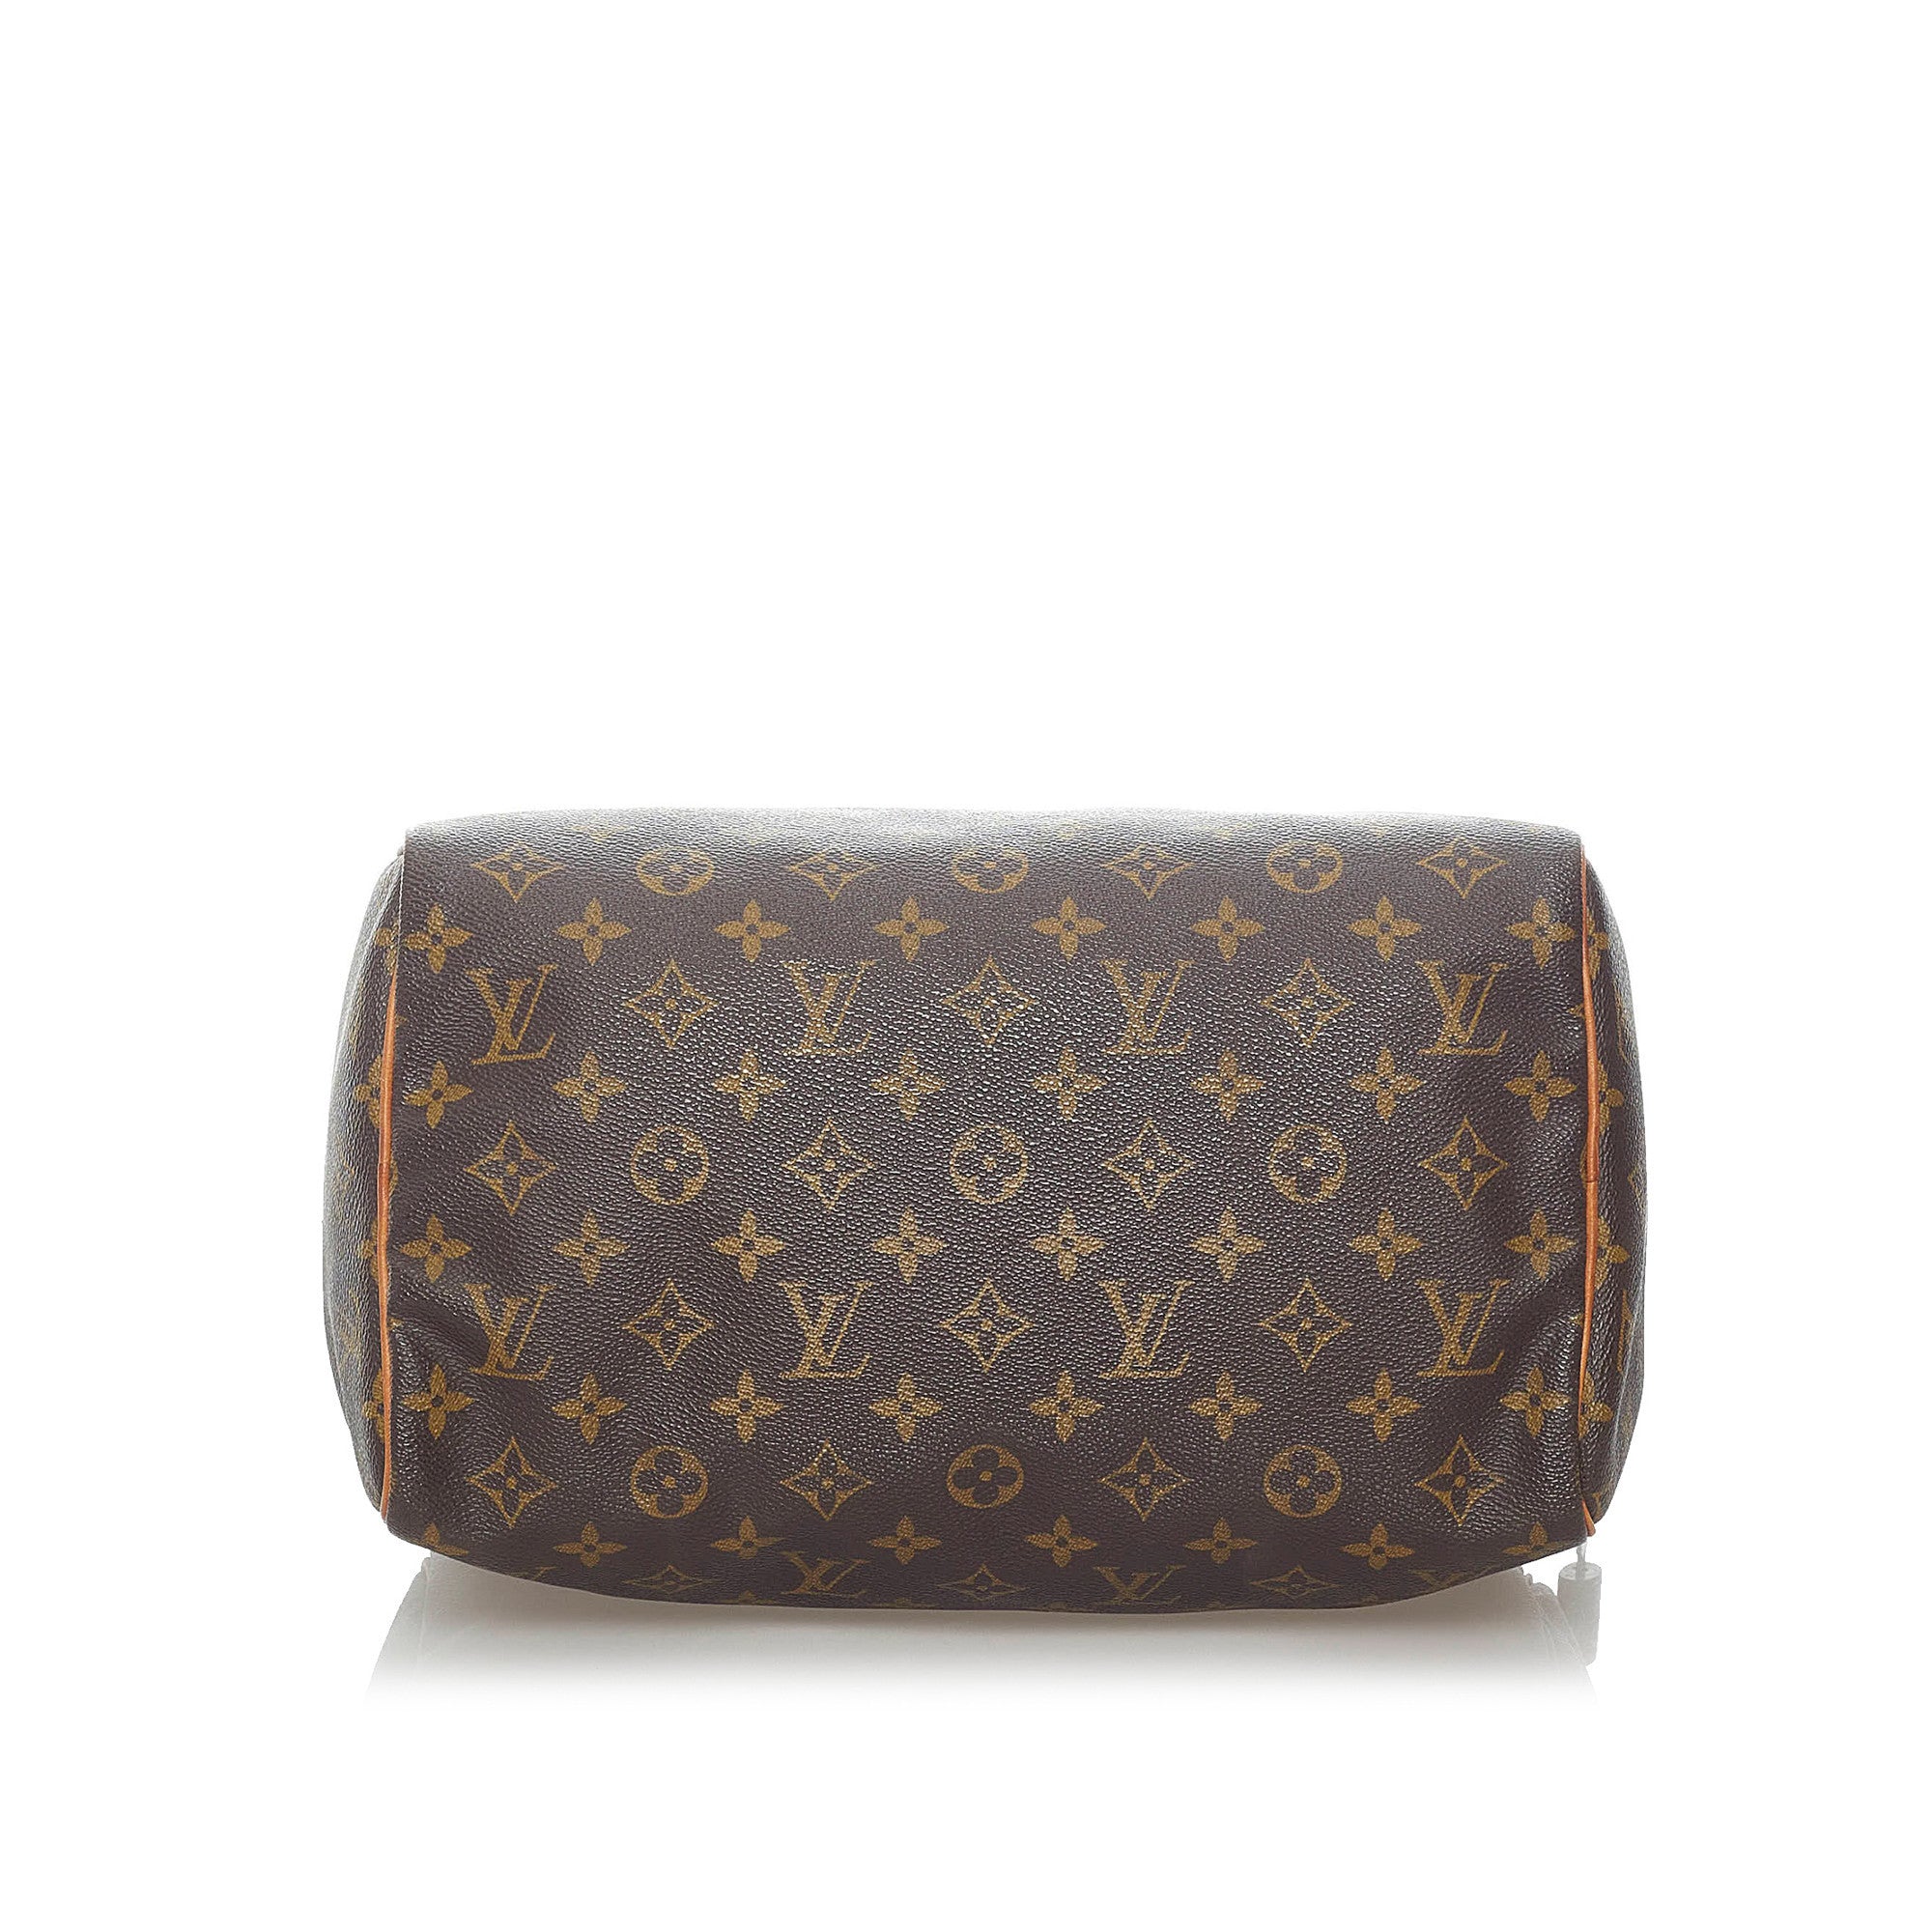 Louis Vuitton Speedy 30 Duffle Bag